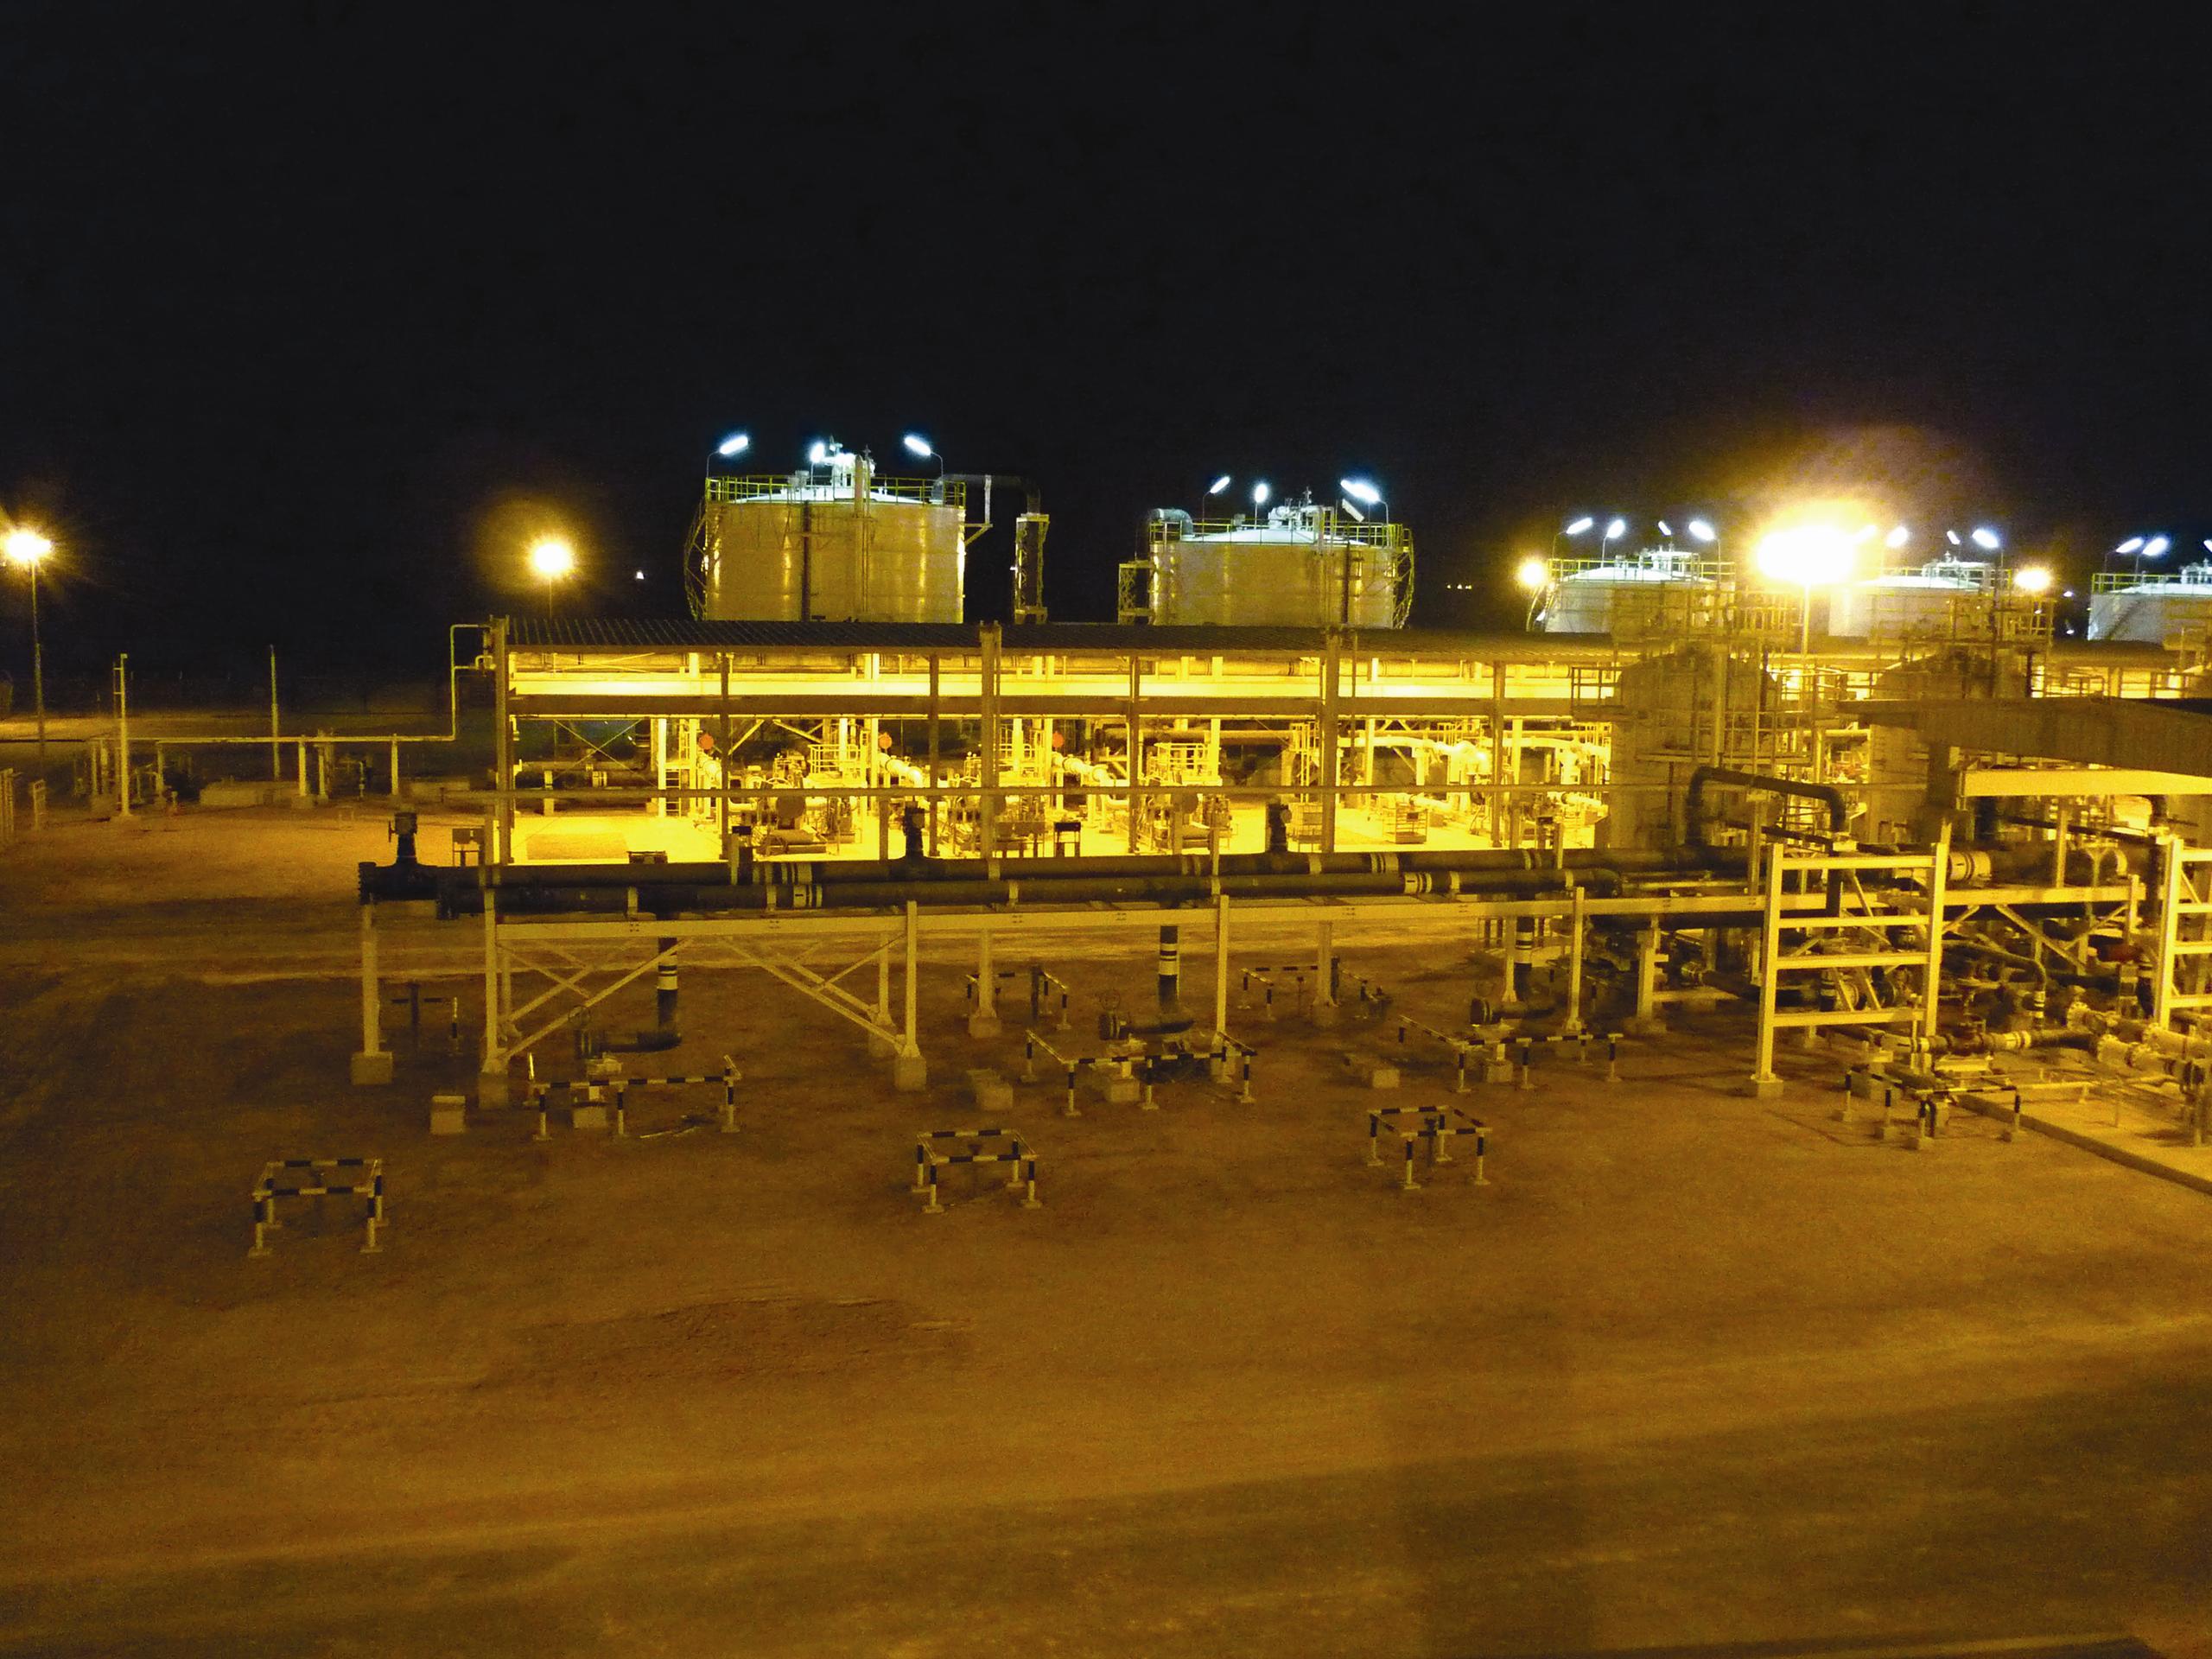 Polymer preparation facility at night